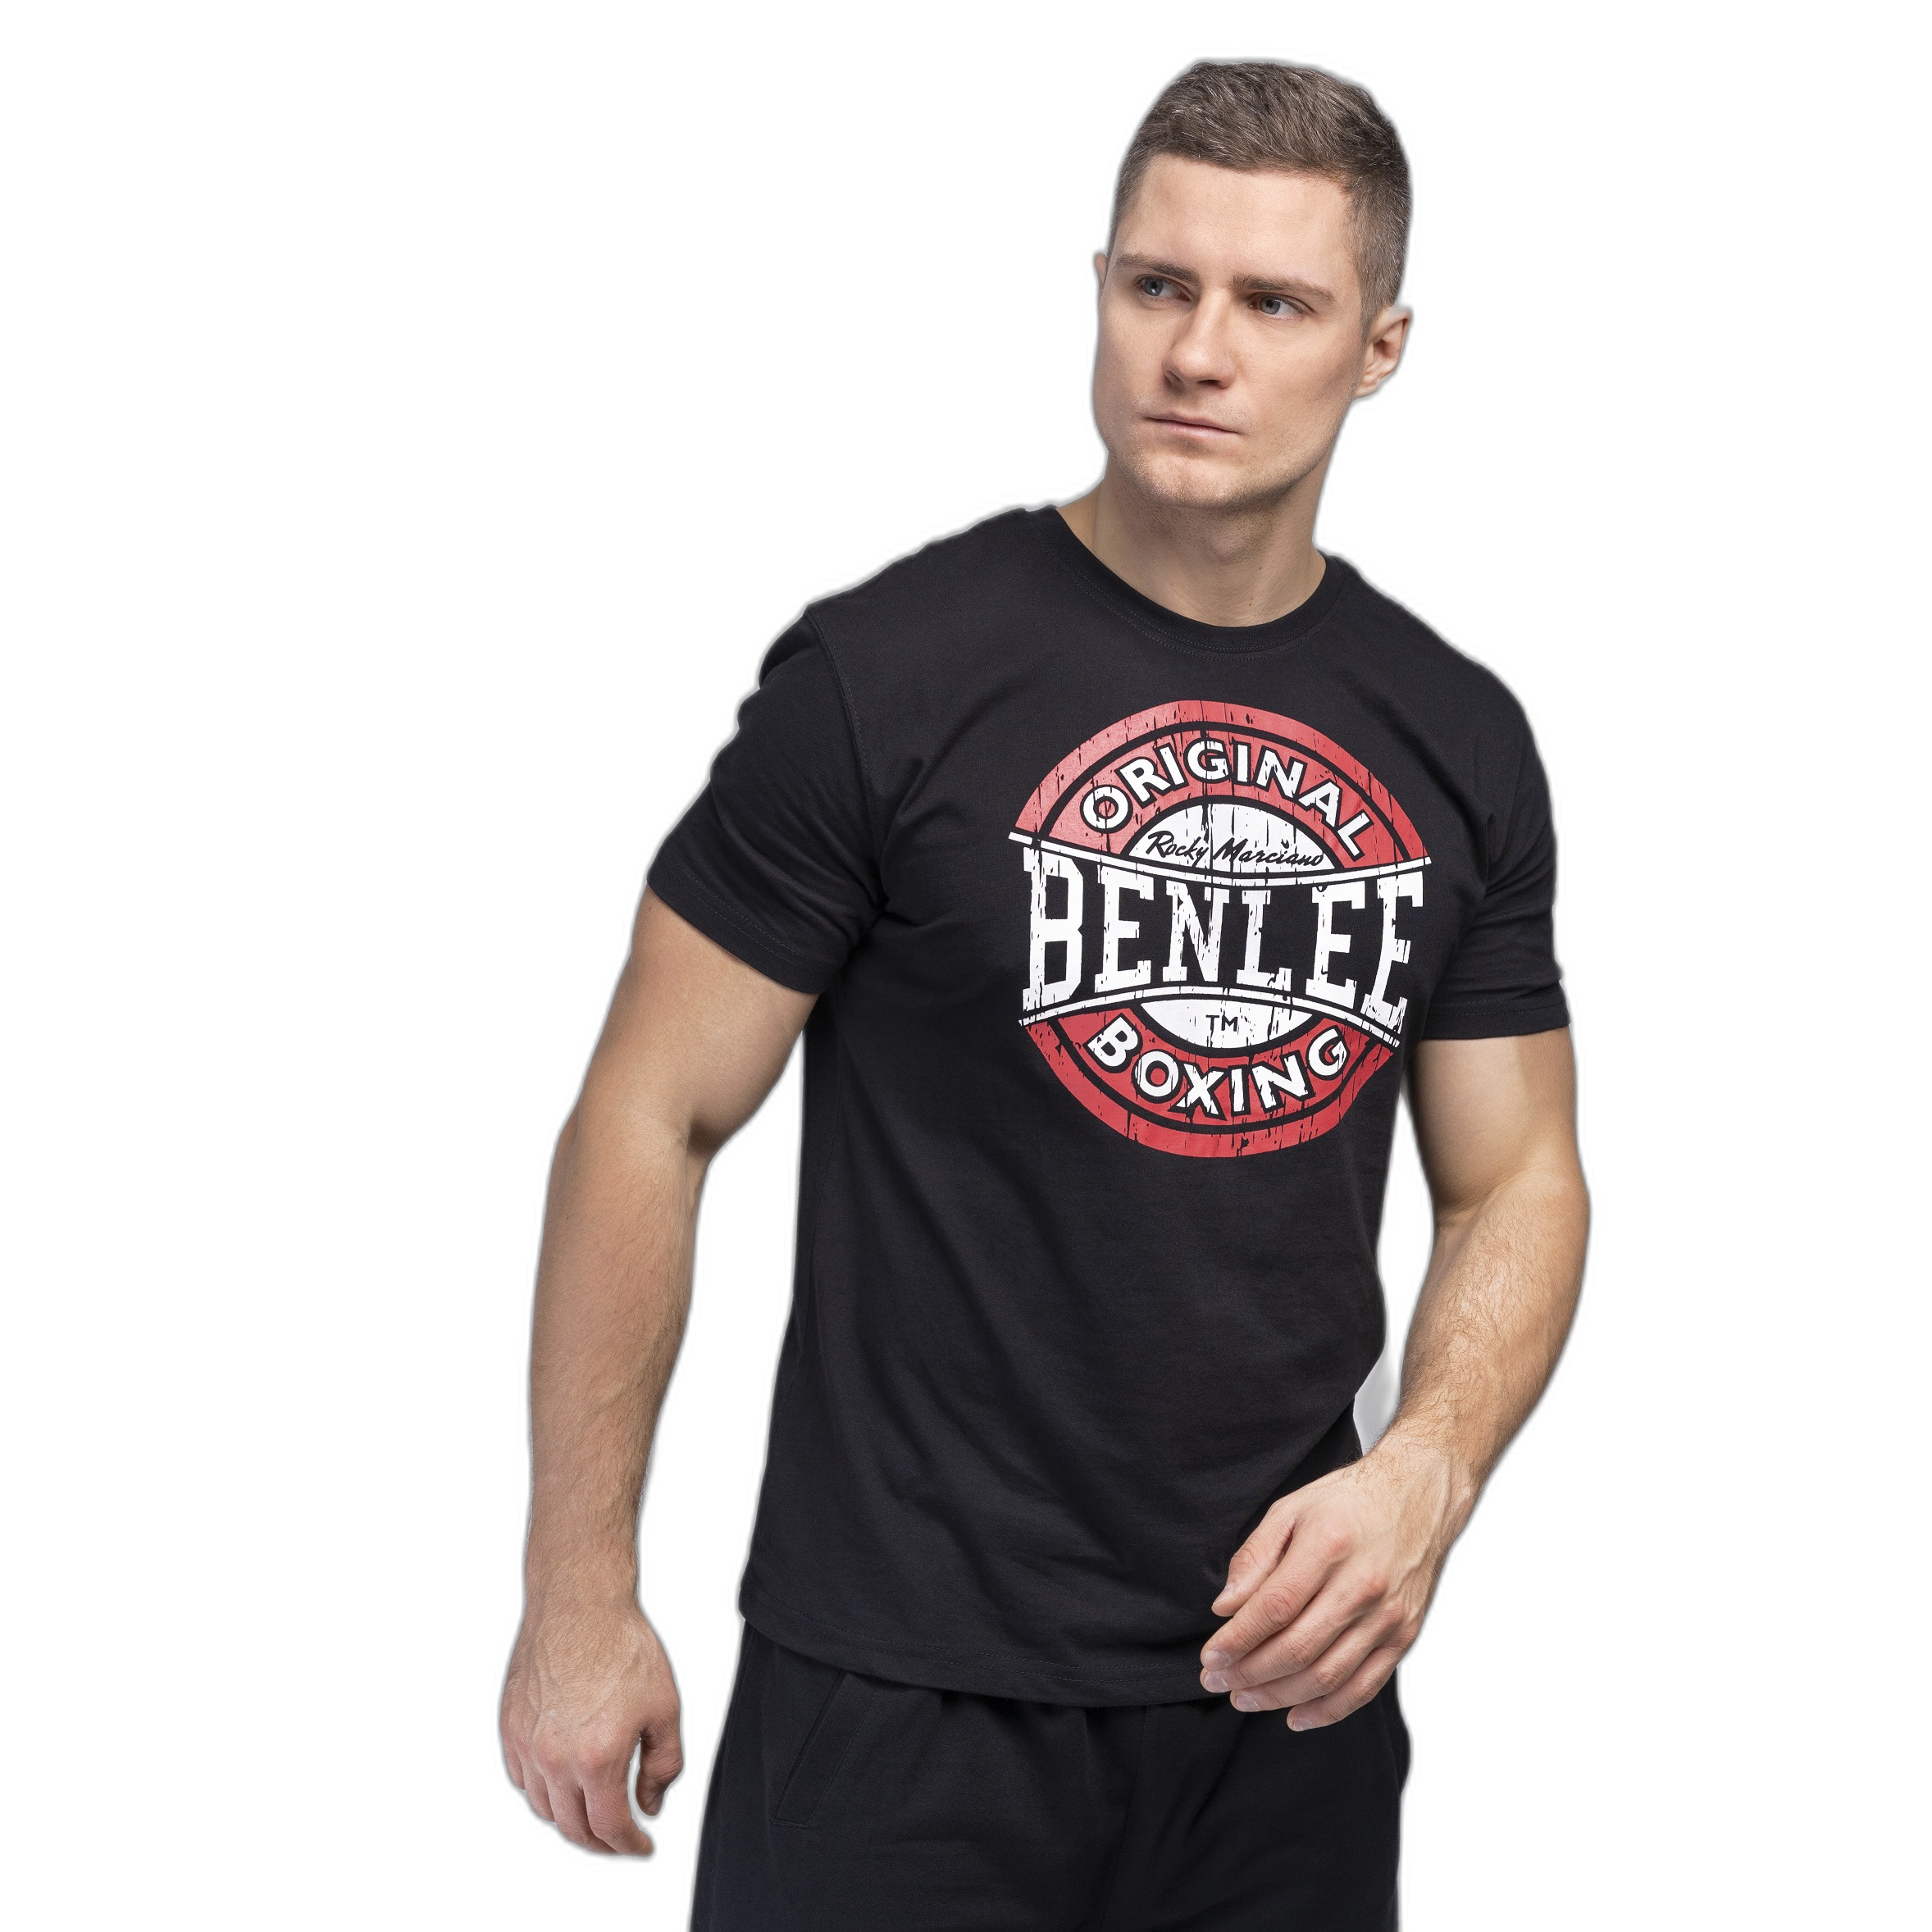 t-shirt benlee boxing logo